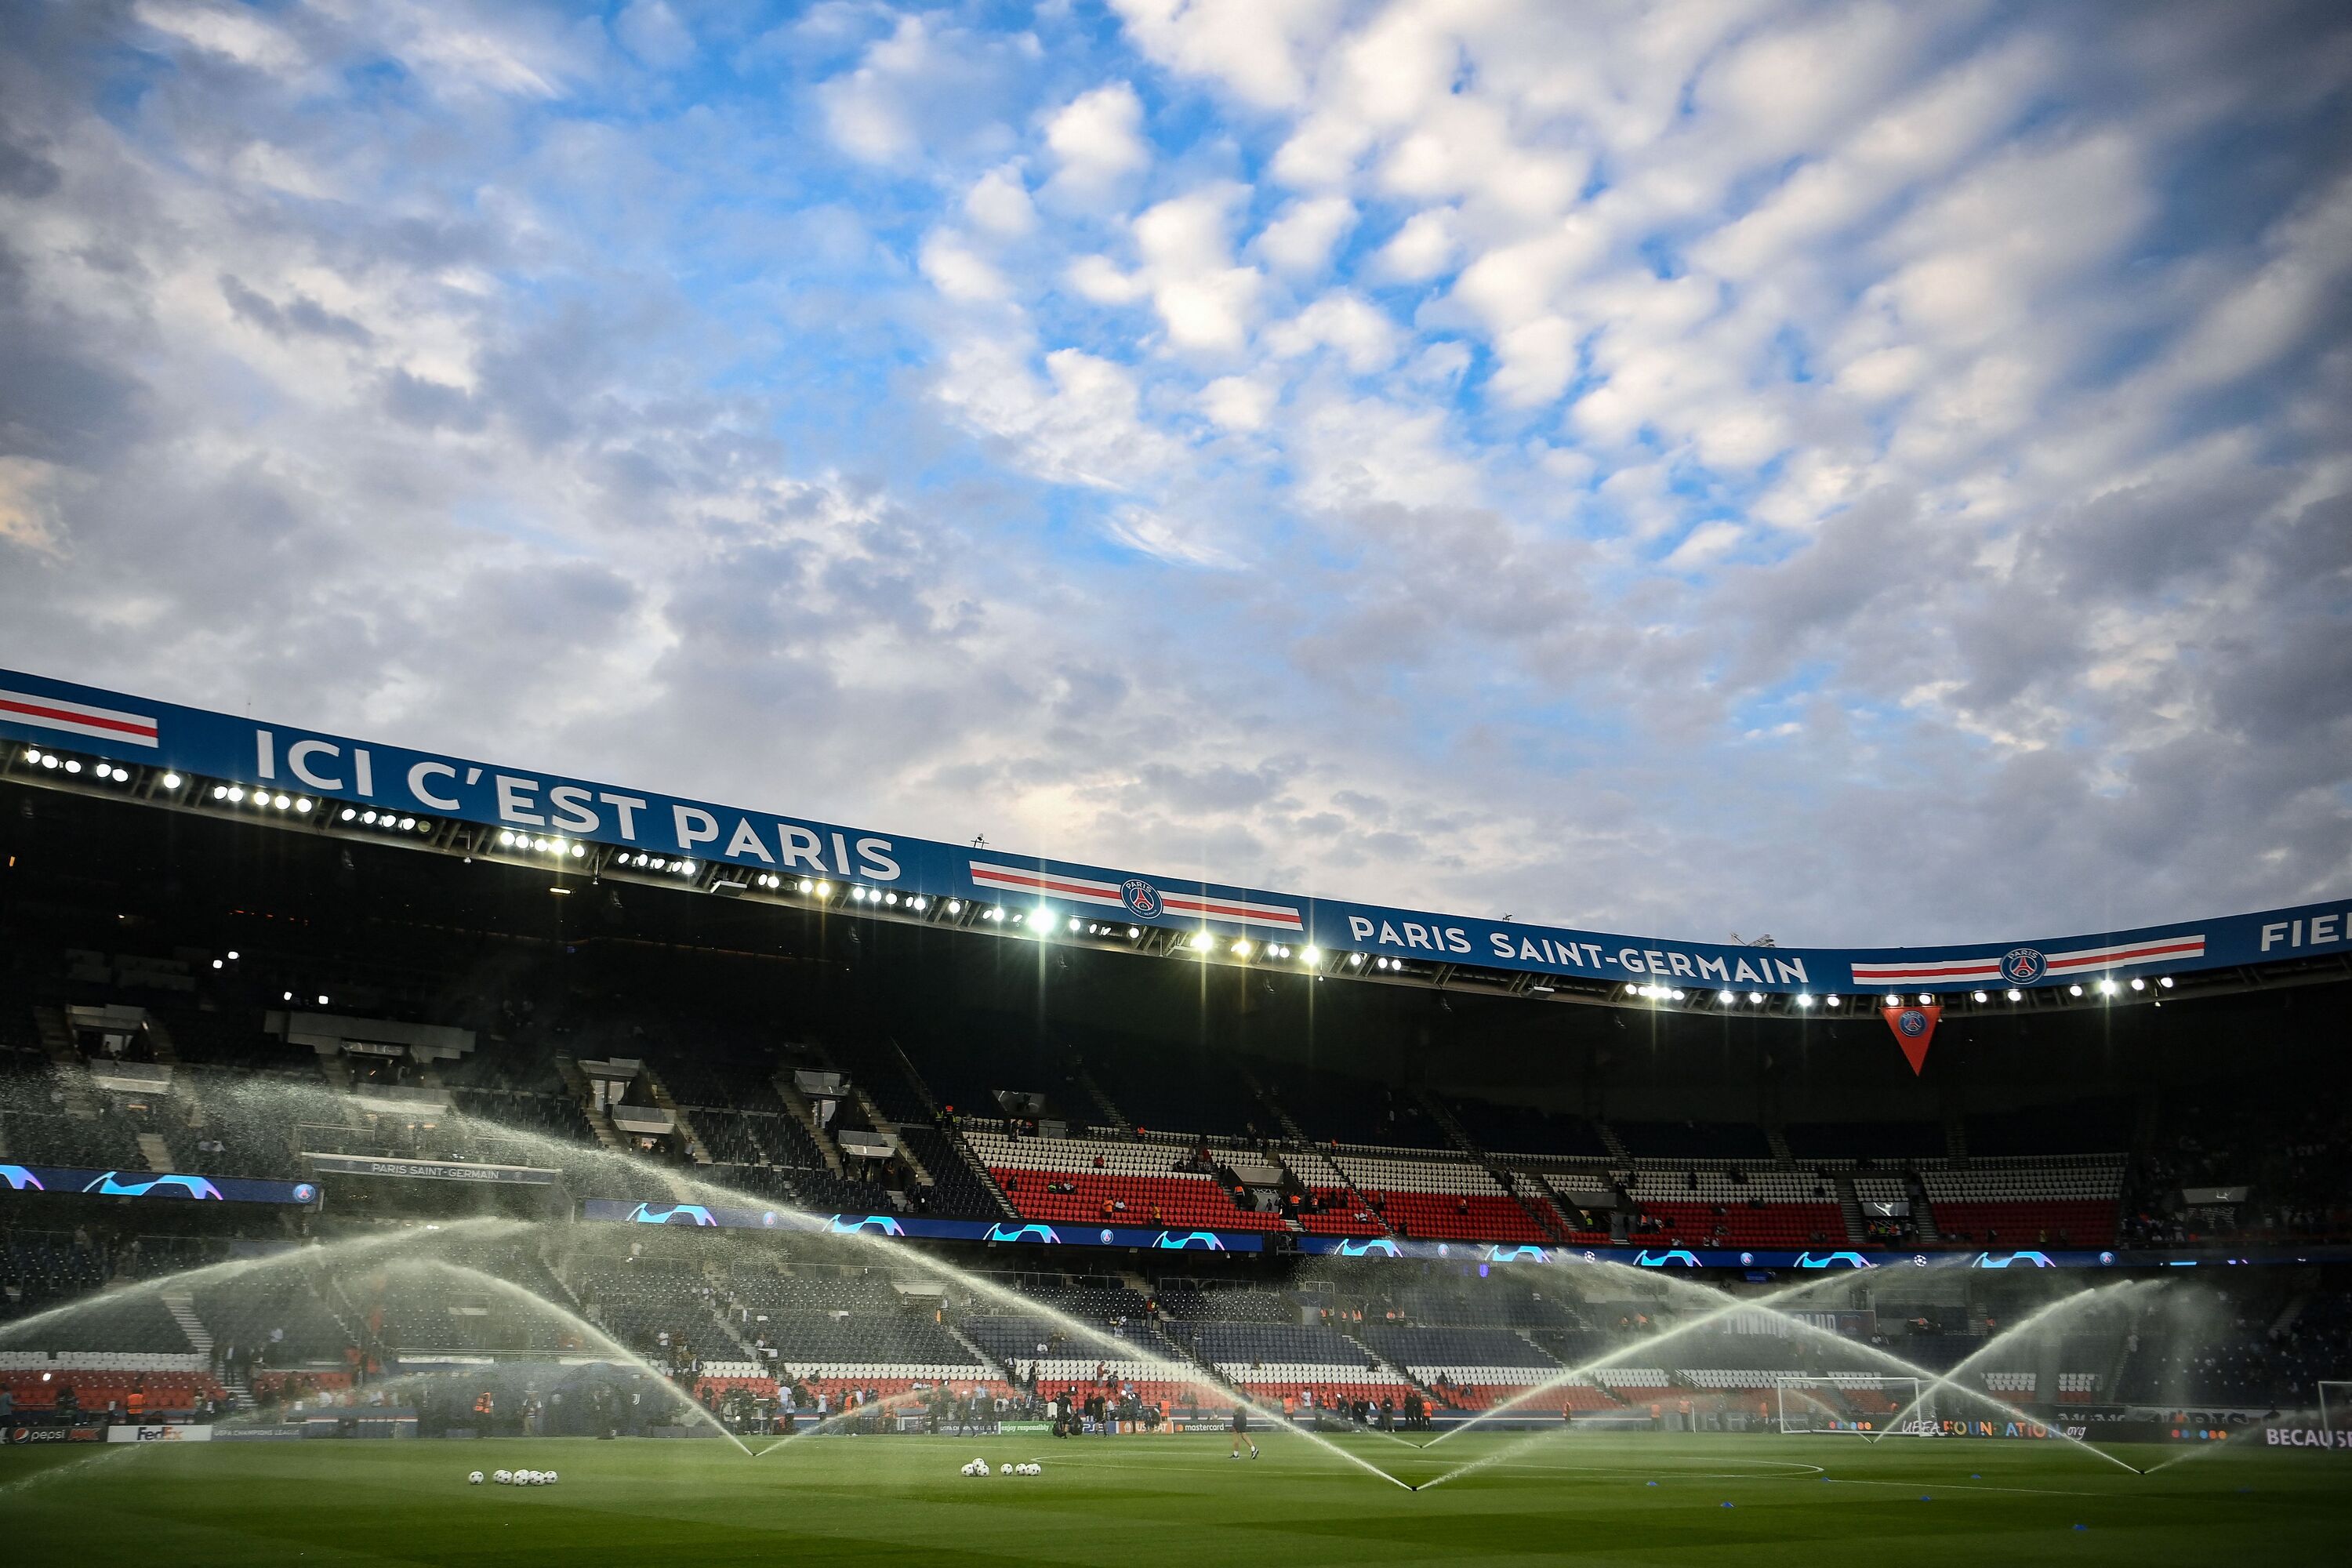 Paris Saint-Germain's home and away kits for next season (2022